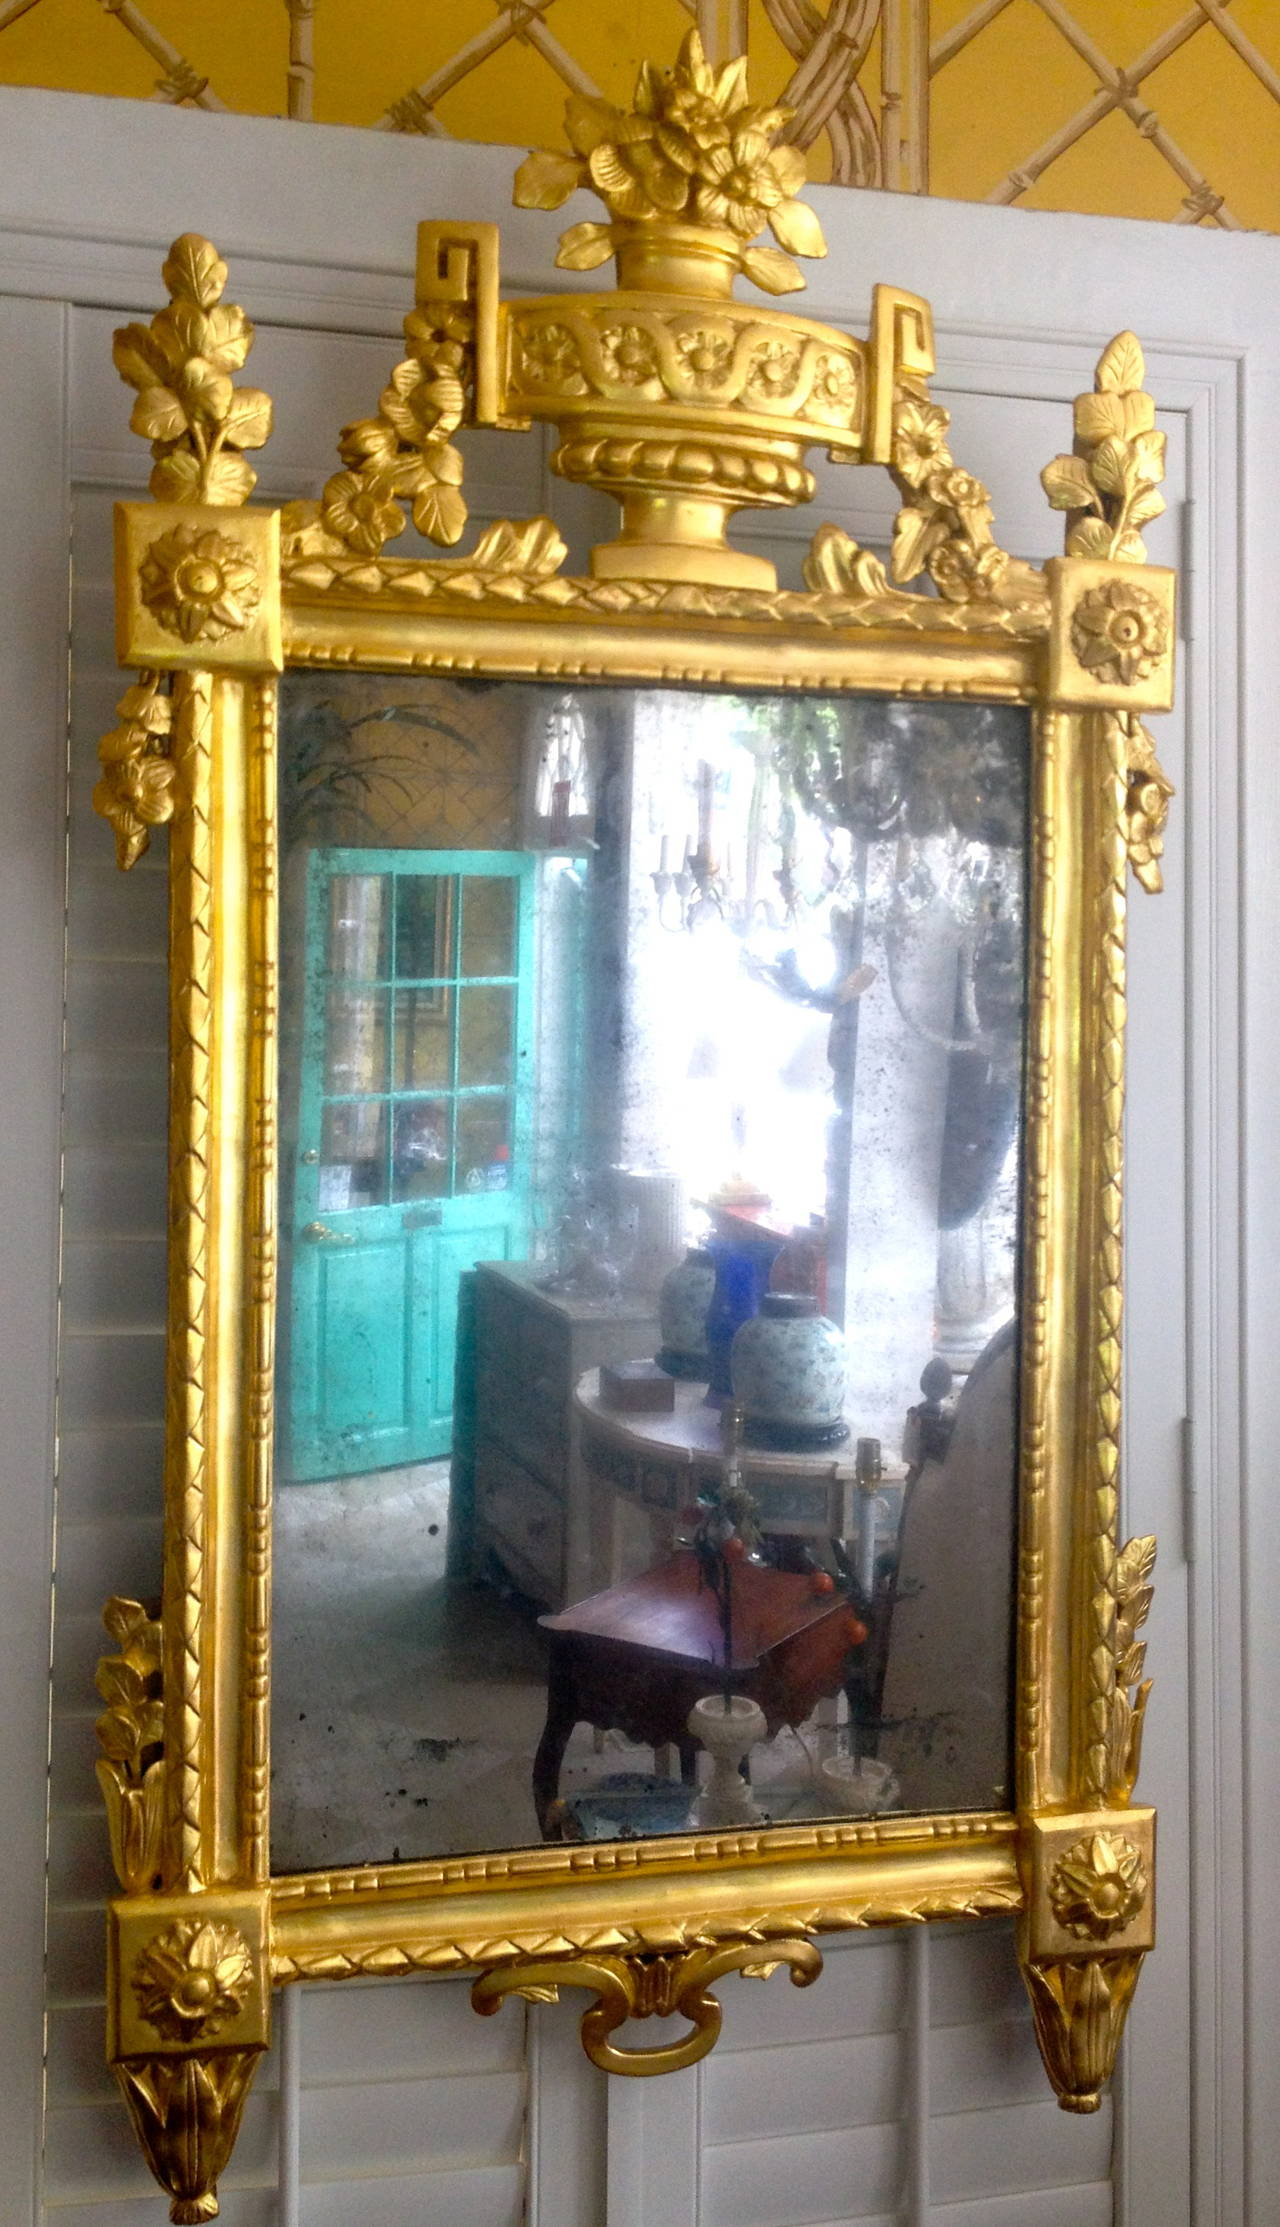 18th century French mirror.